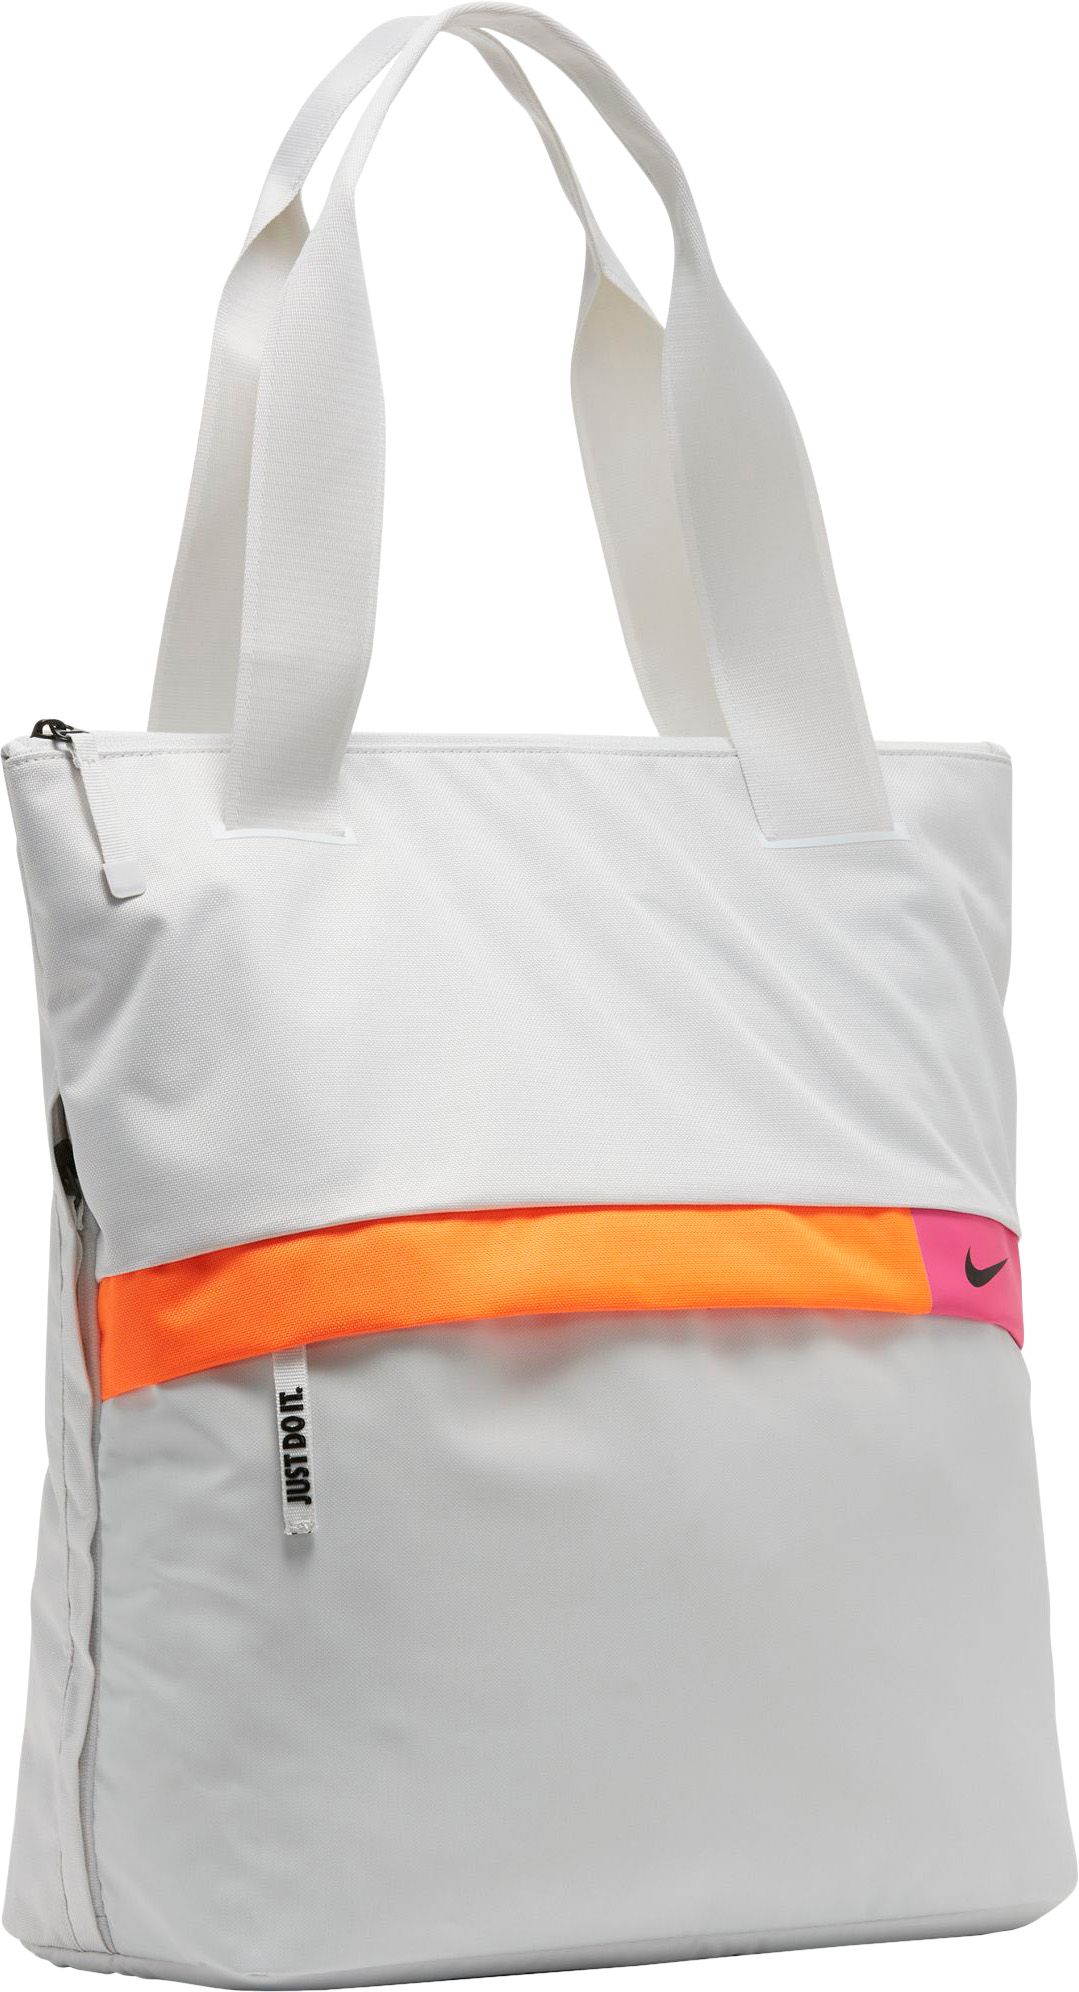 nike radiate women's training tote bag